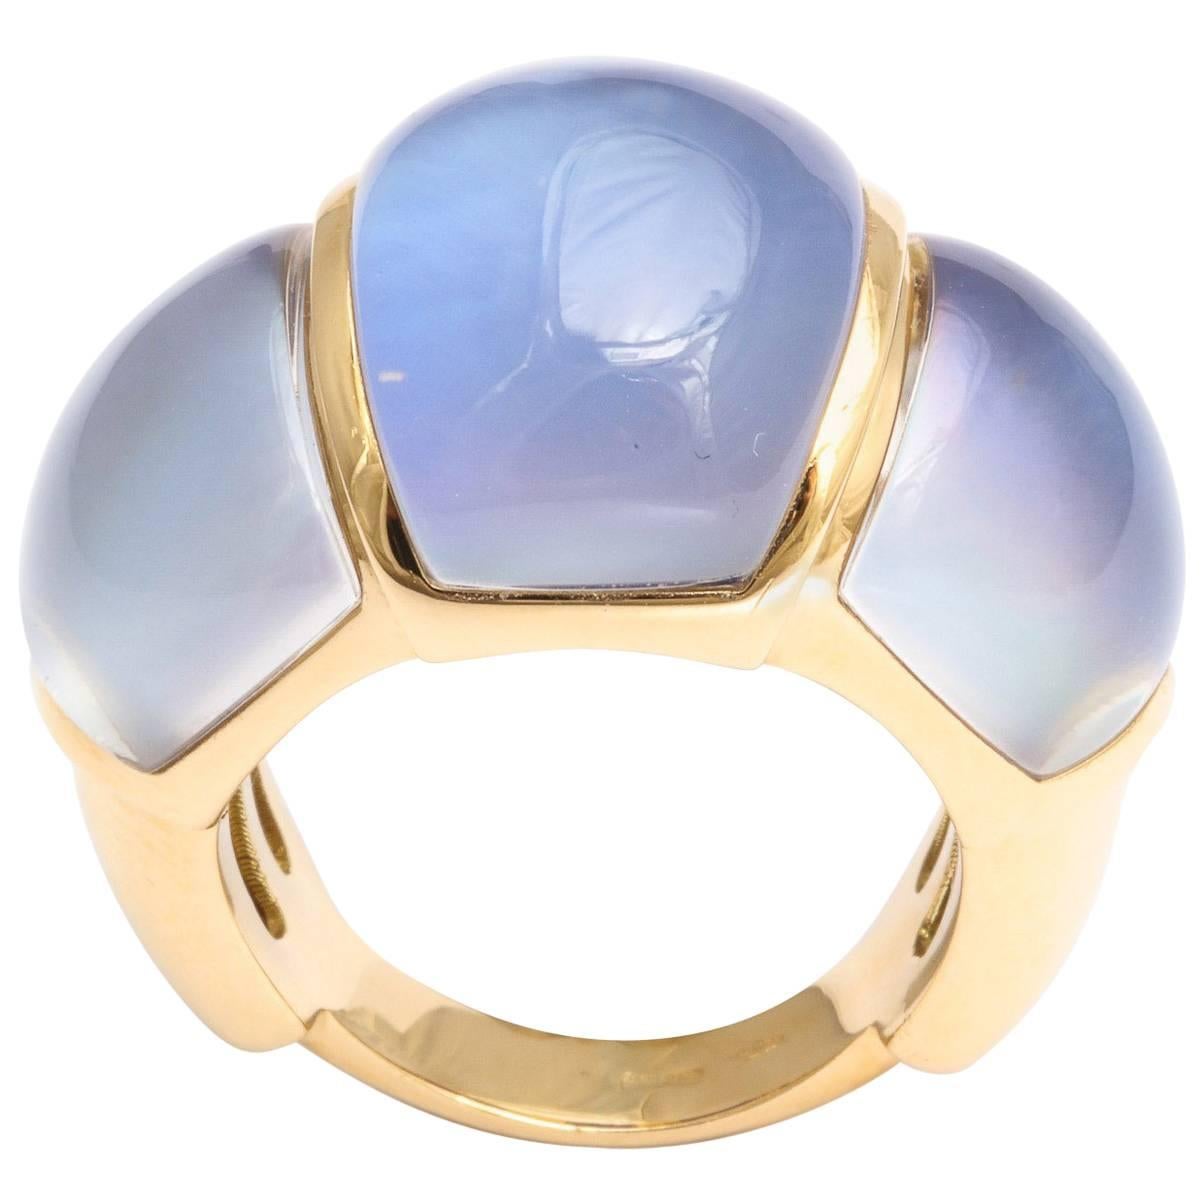 Are Swarovski rings real gold?